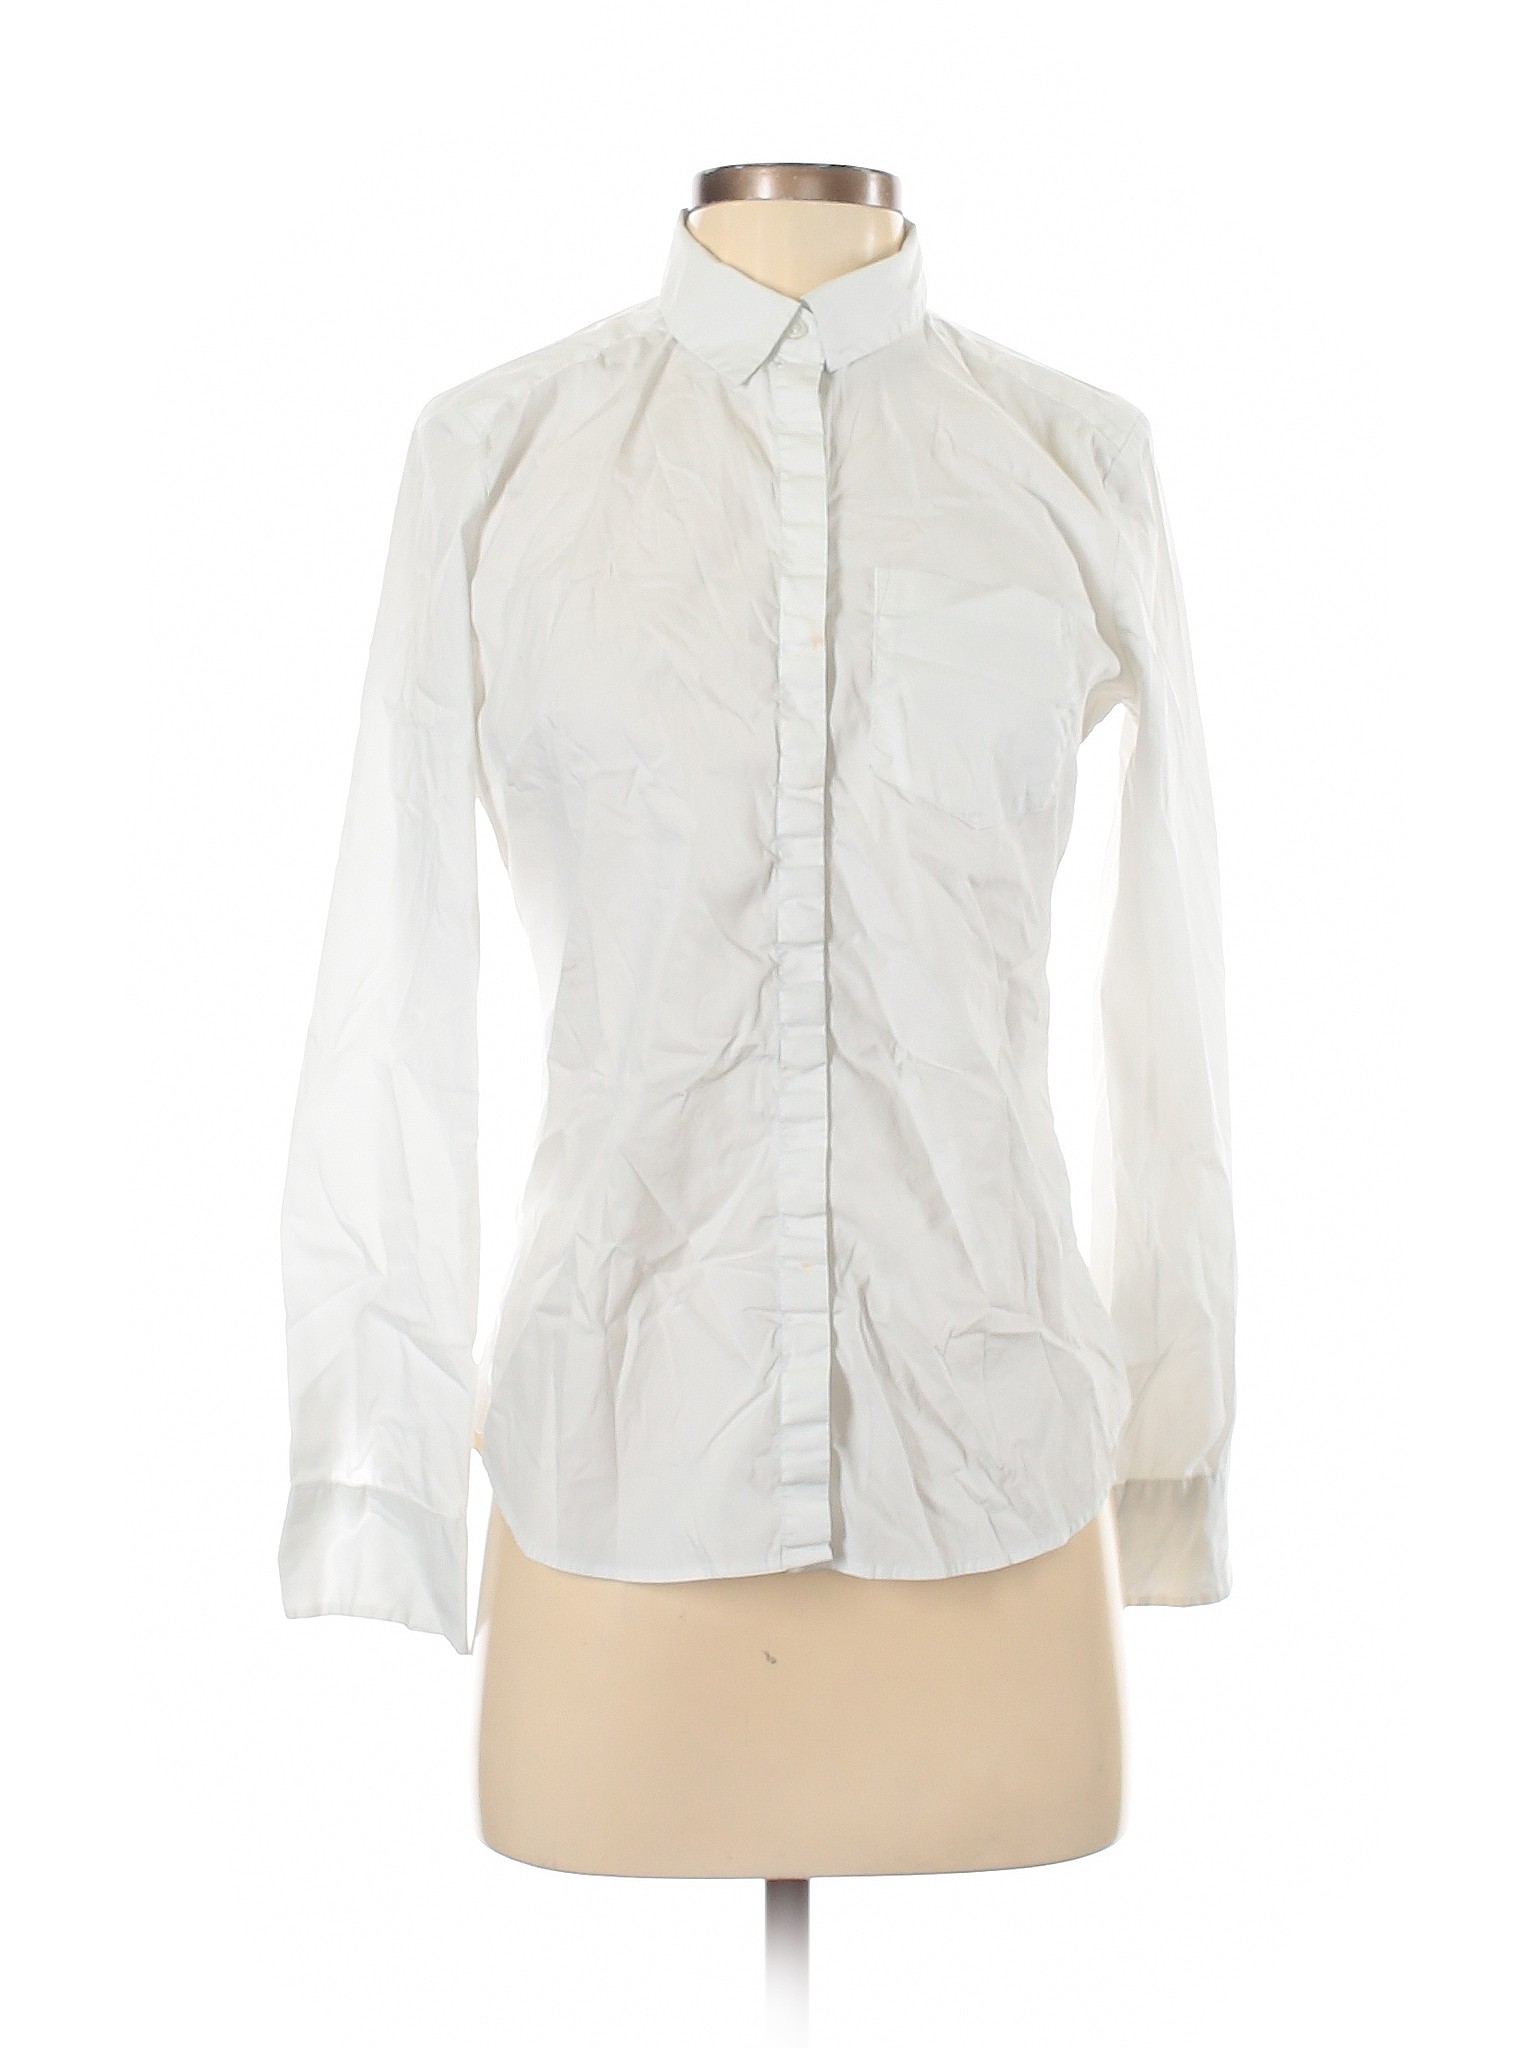 H&M Women White Long Sleeve Button-Down Shirt 4 | eBay